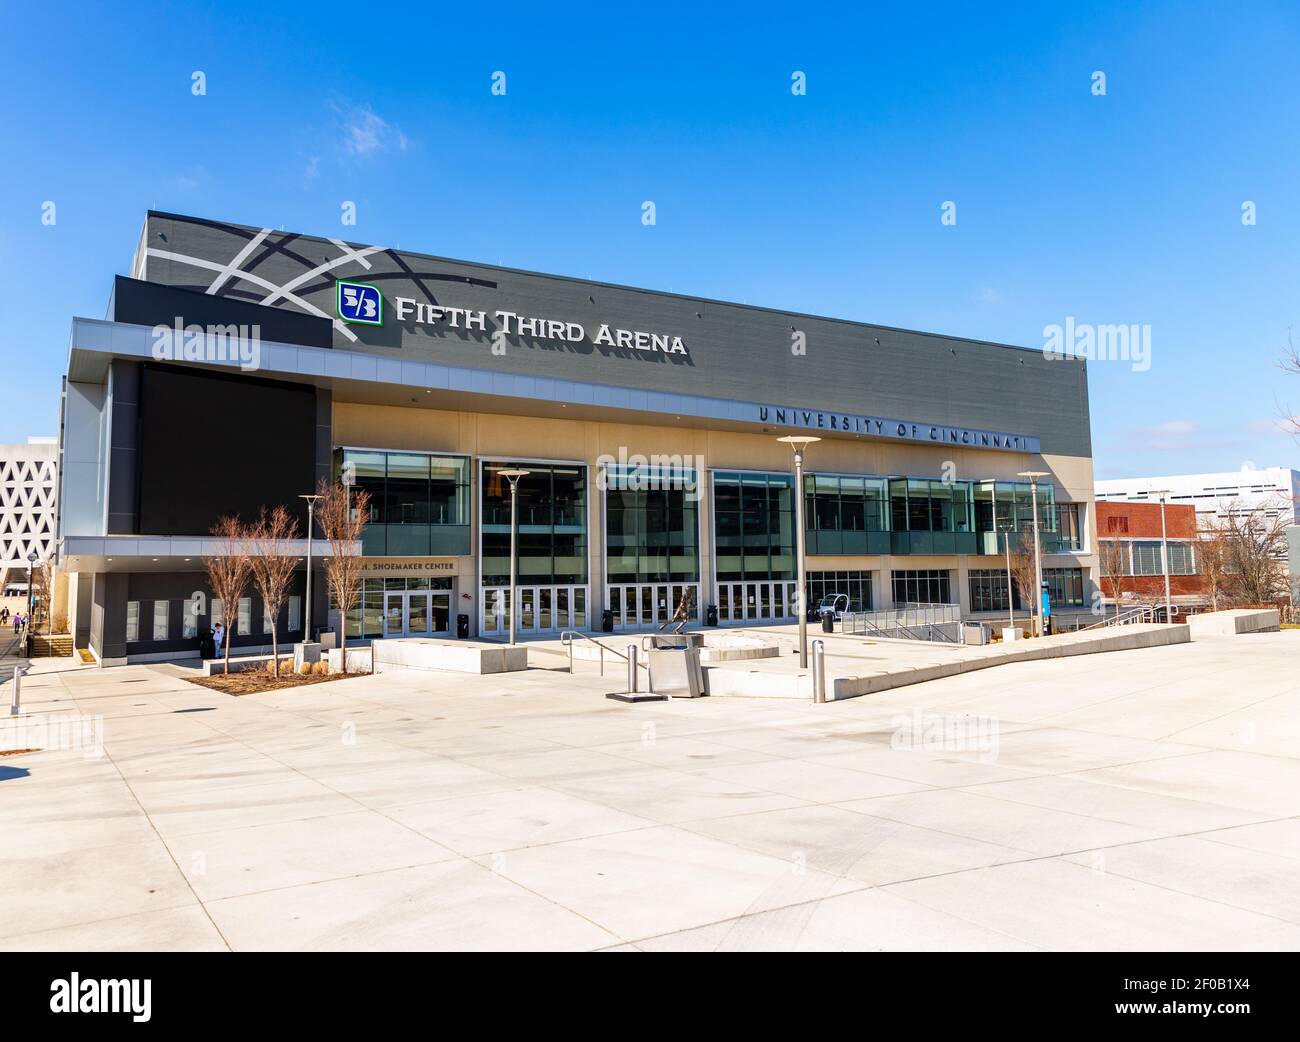 Cincinnati, OH - February 27, 2021: Fifth Third Arena on the campus of the University of Cincinnati Stock Photo